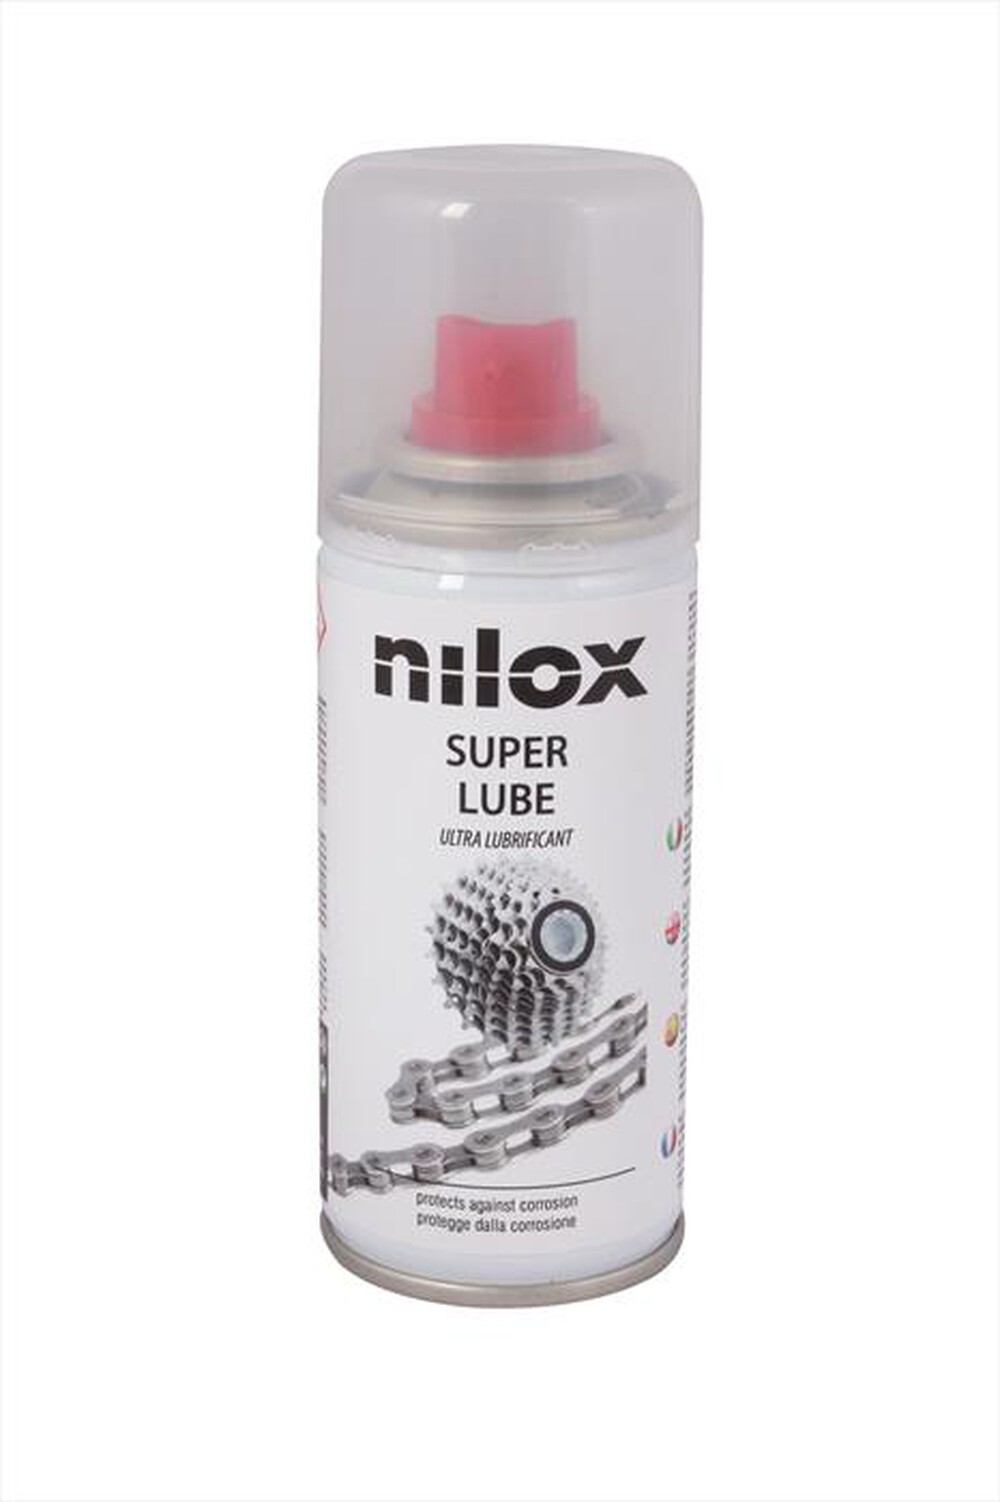 "NILOX - NILOX LUBRIFICANTE 100 ML"